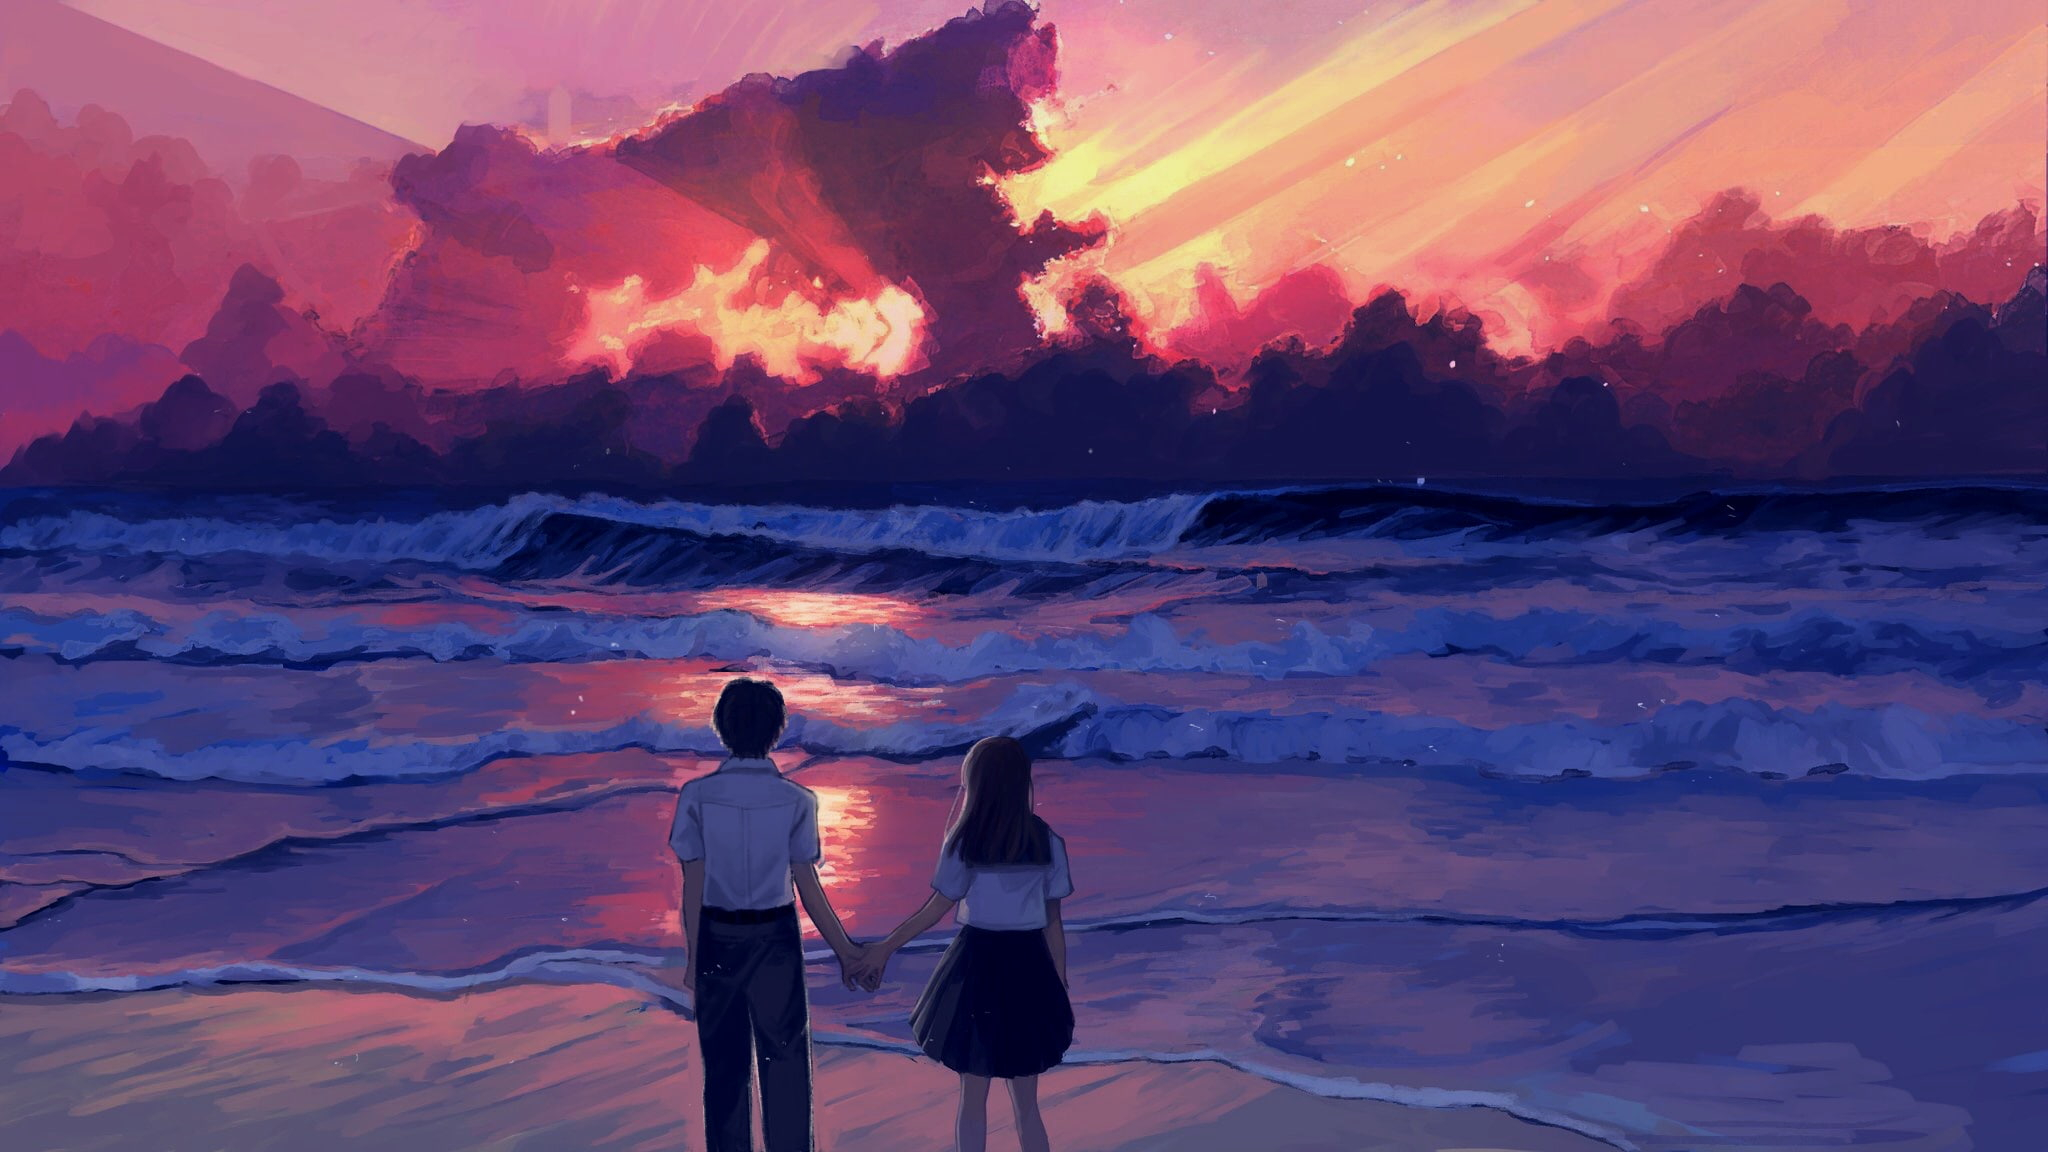 Anime wallpaper, illustration, landscape, sea, sunset, painting, digital art